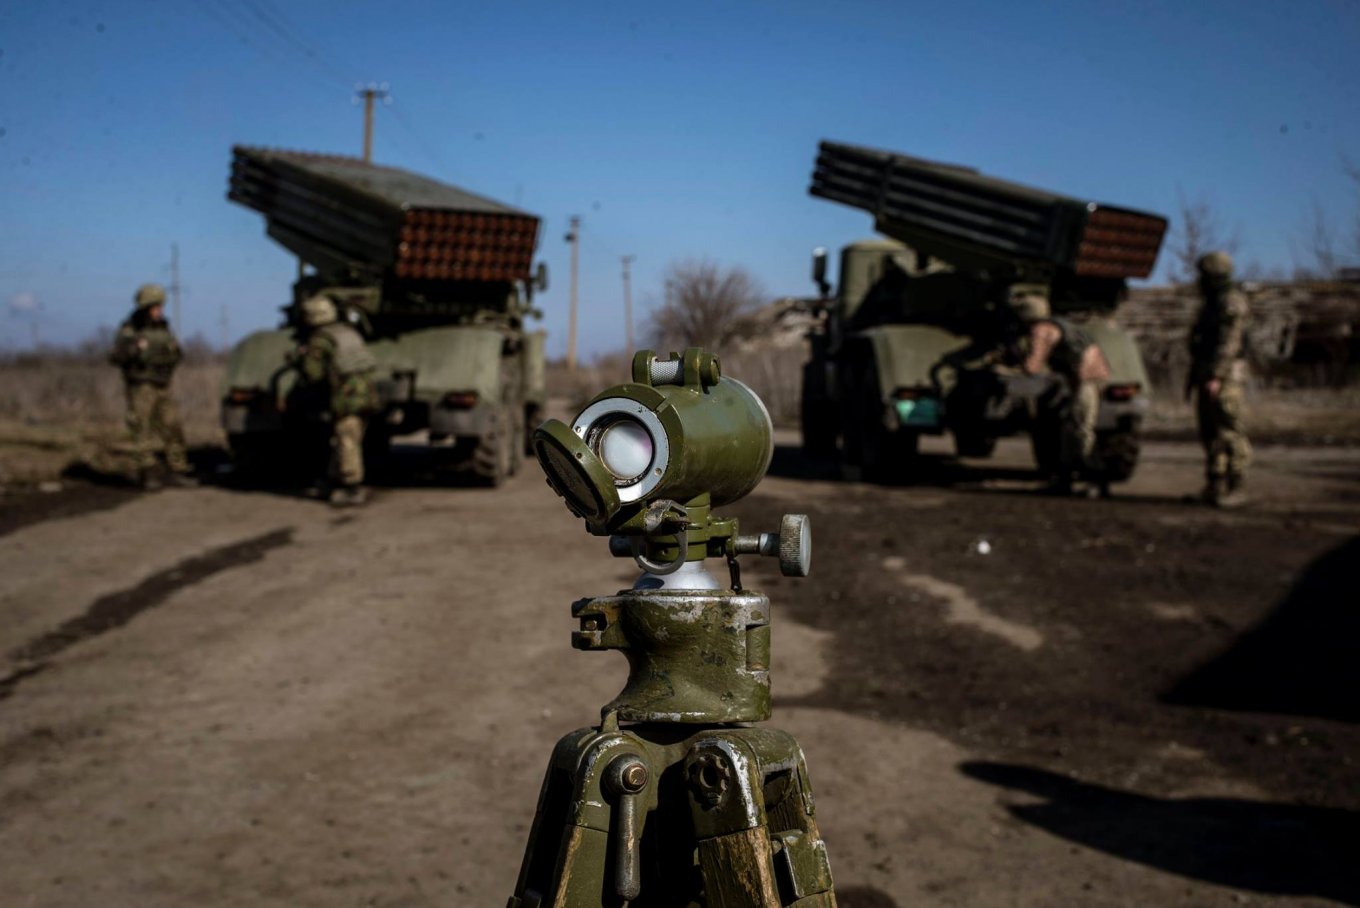 Ukraine’s Rare Bastion-02 MLRS System Combat Use (Video), Defense Express, war in Ukraine, Russian-Ukrainian war